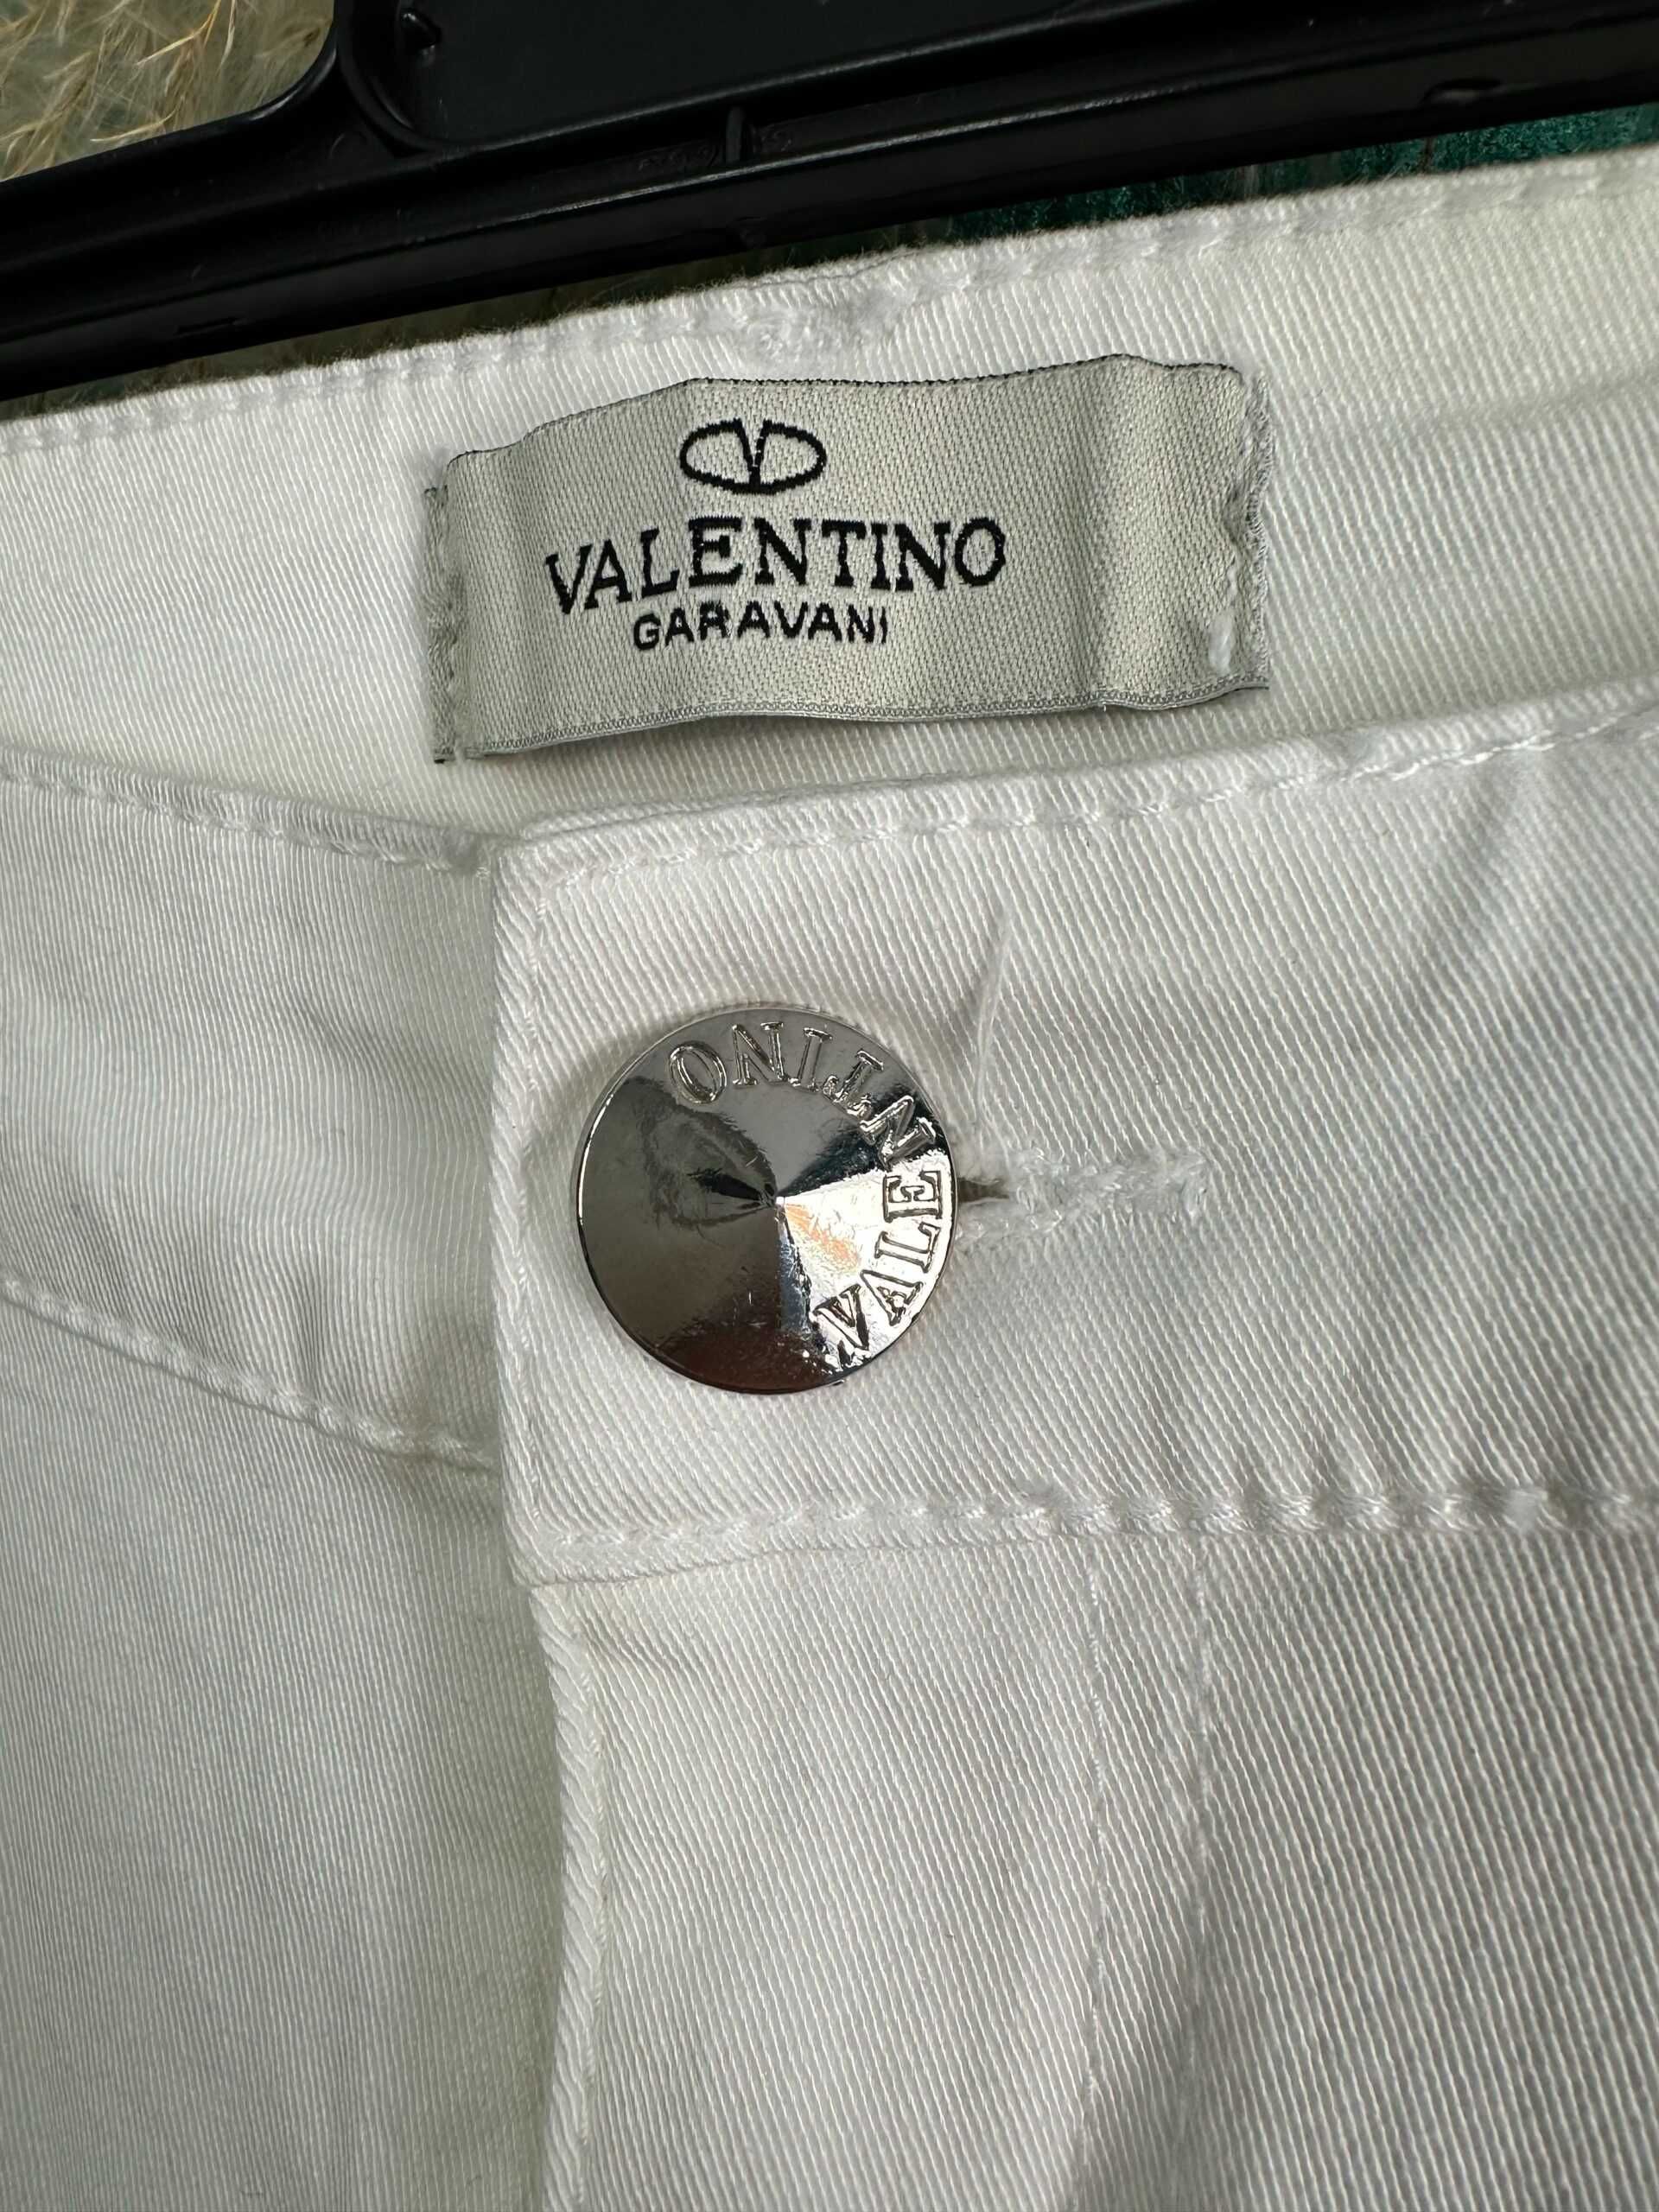 Blugi albi, mărimea 29 (M), marca VALENTINO Garavani